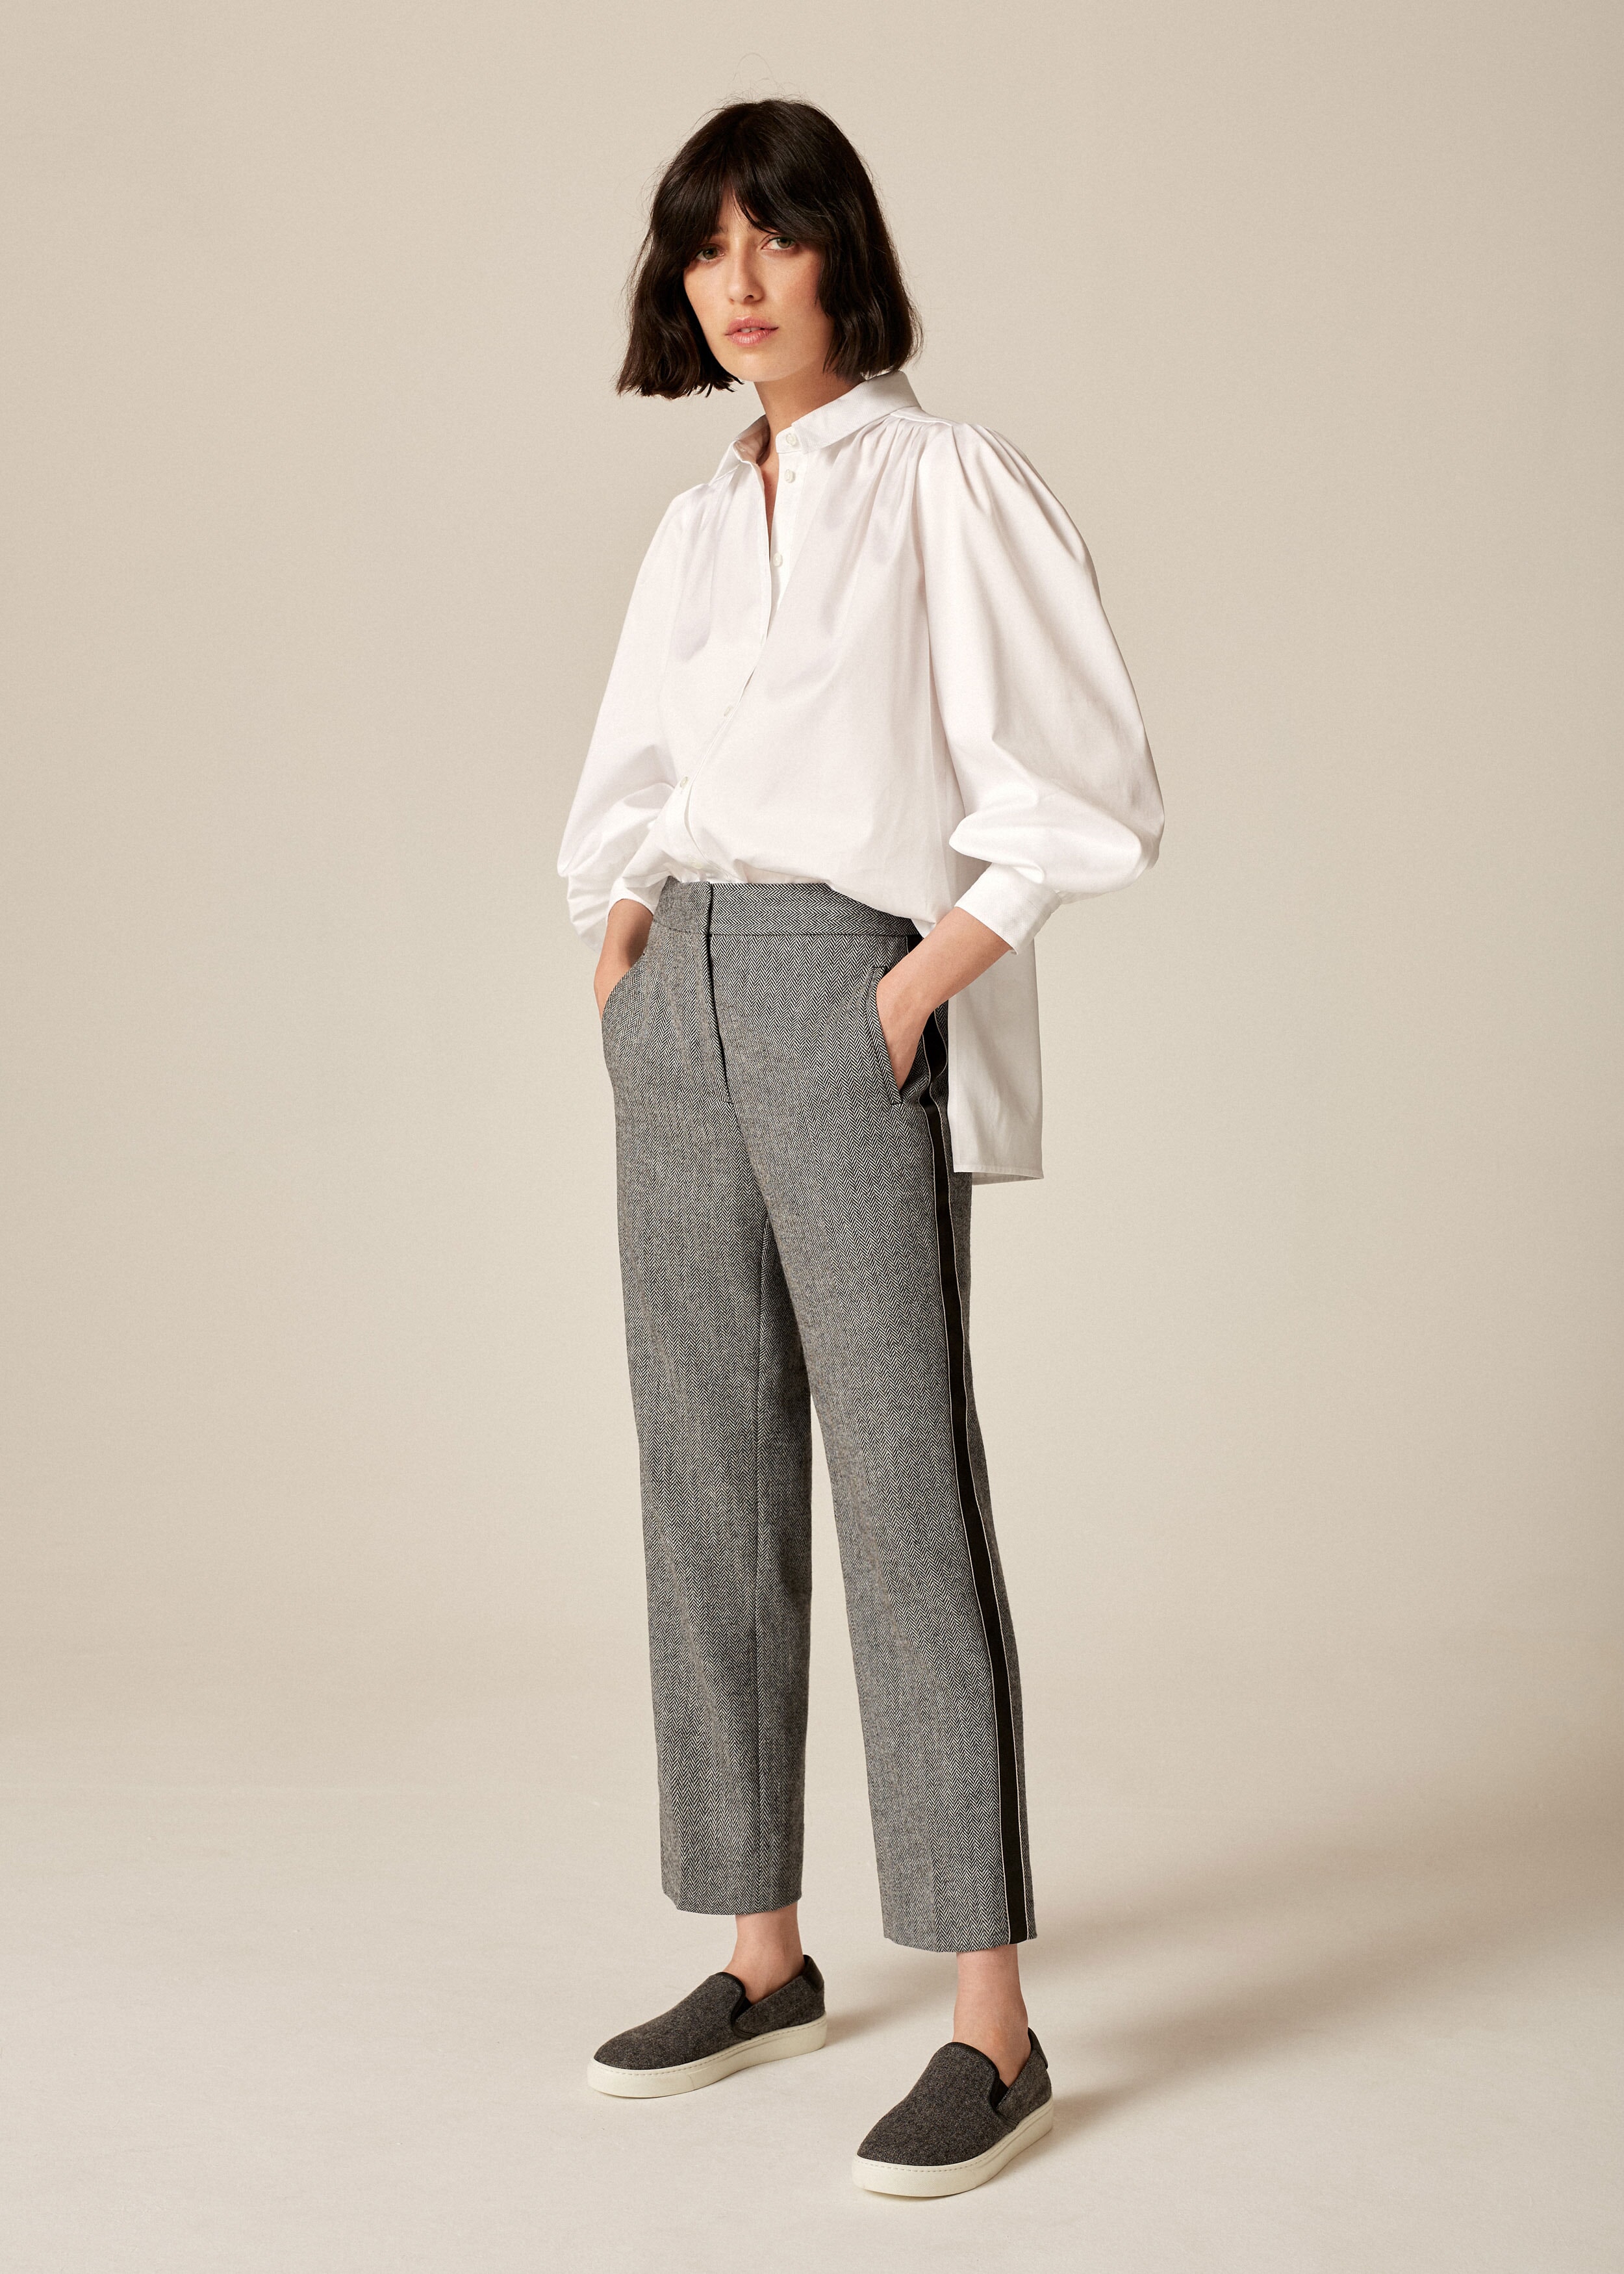 Sale Trousers - Women's SS22 Fashion | ME+EM